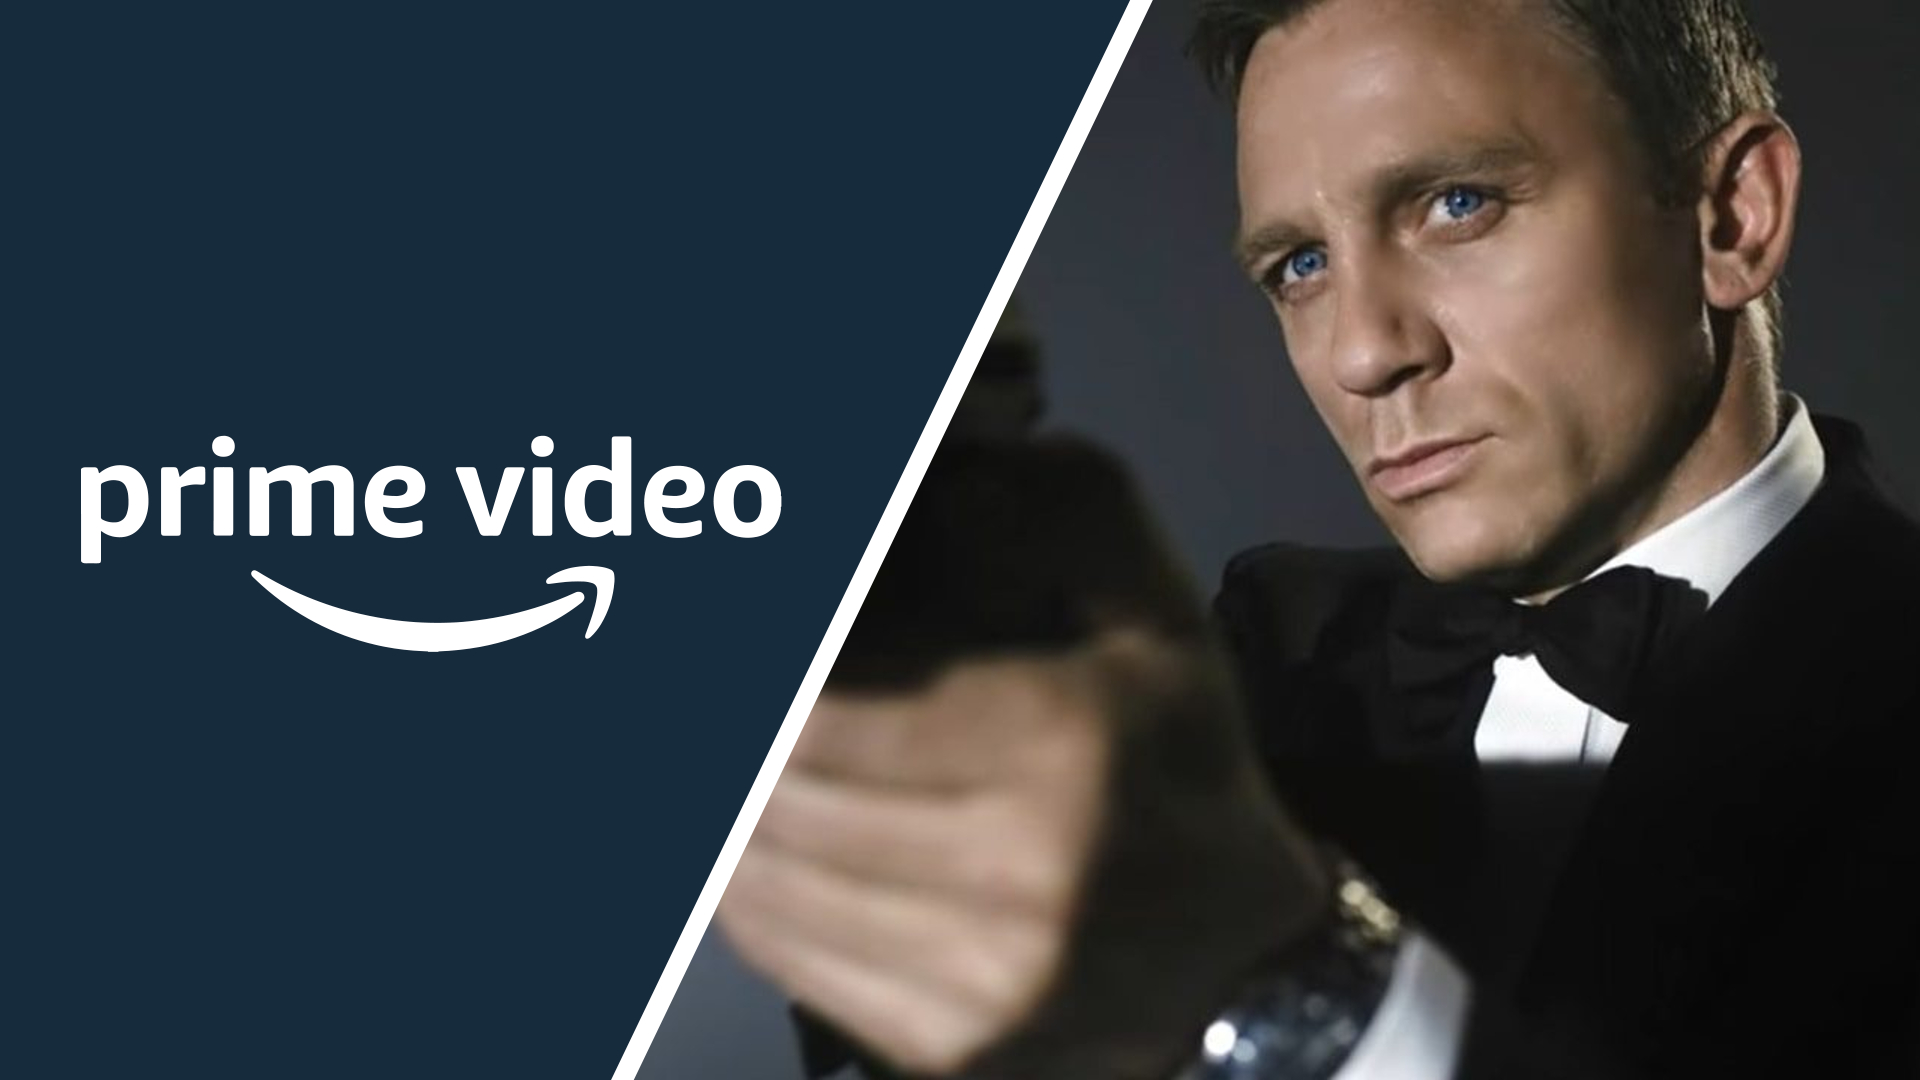 007 Amazon Prime Video Anade A Su Catalogo Todas Las Peliculas De James Bond Tvlaint